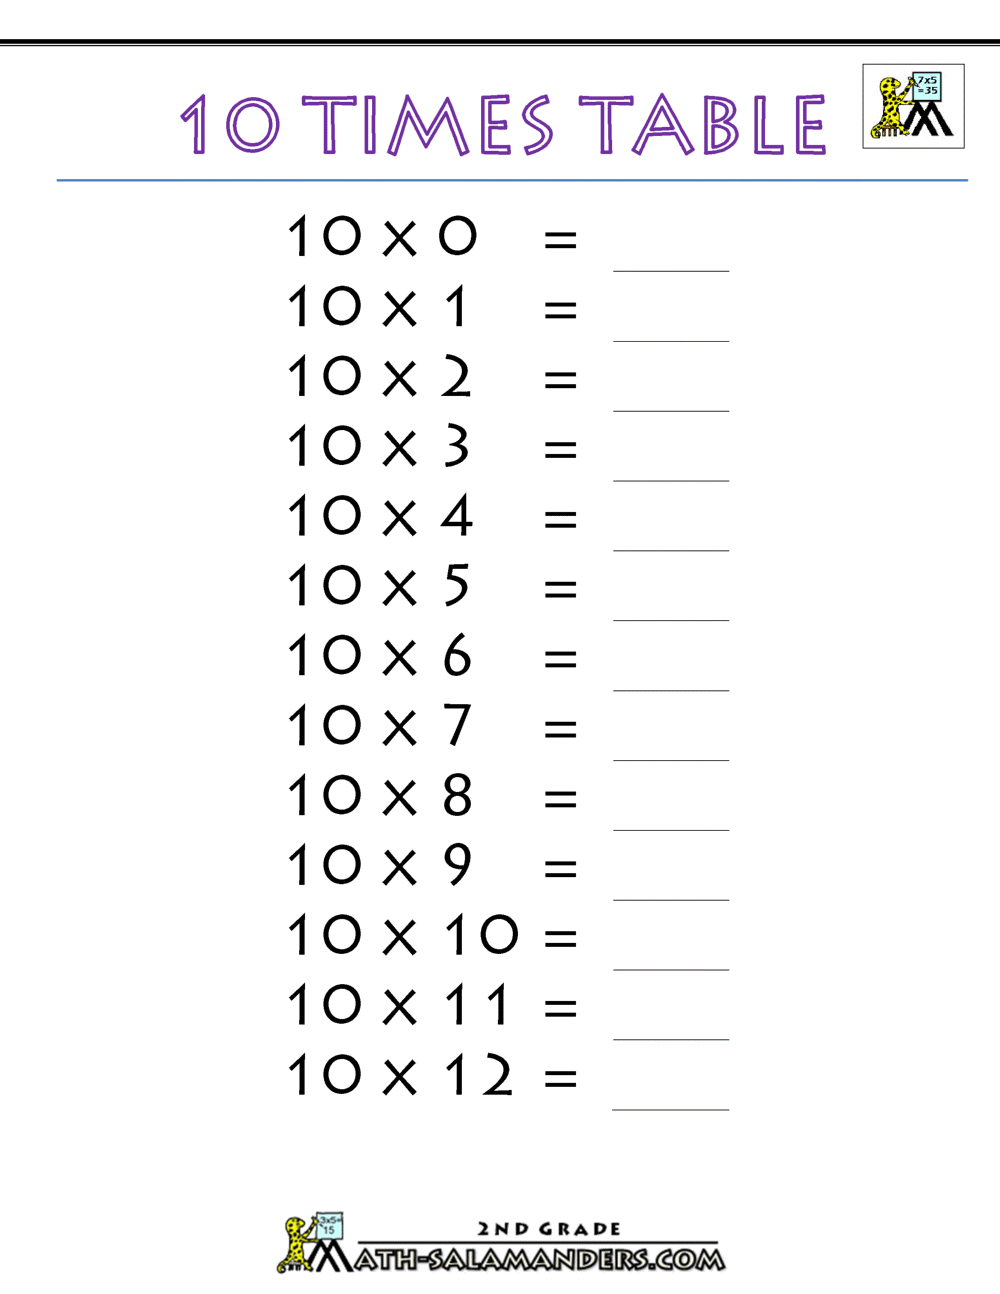 Multiplication Chart Blank 1 12